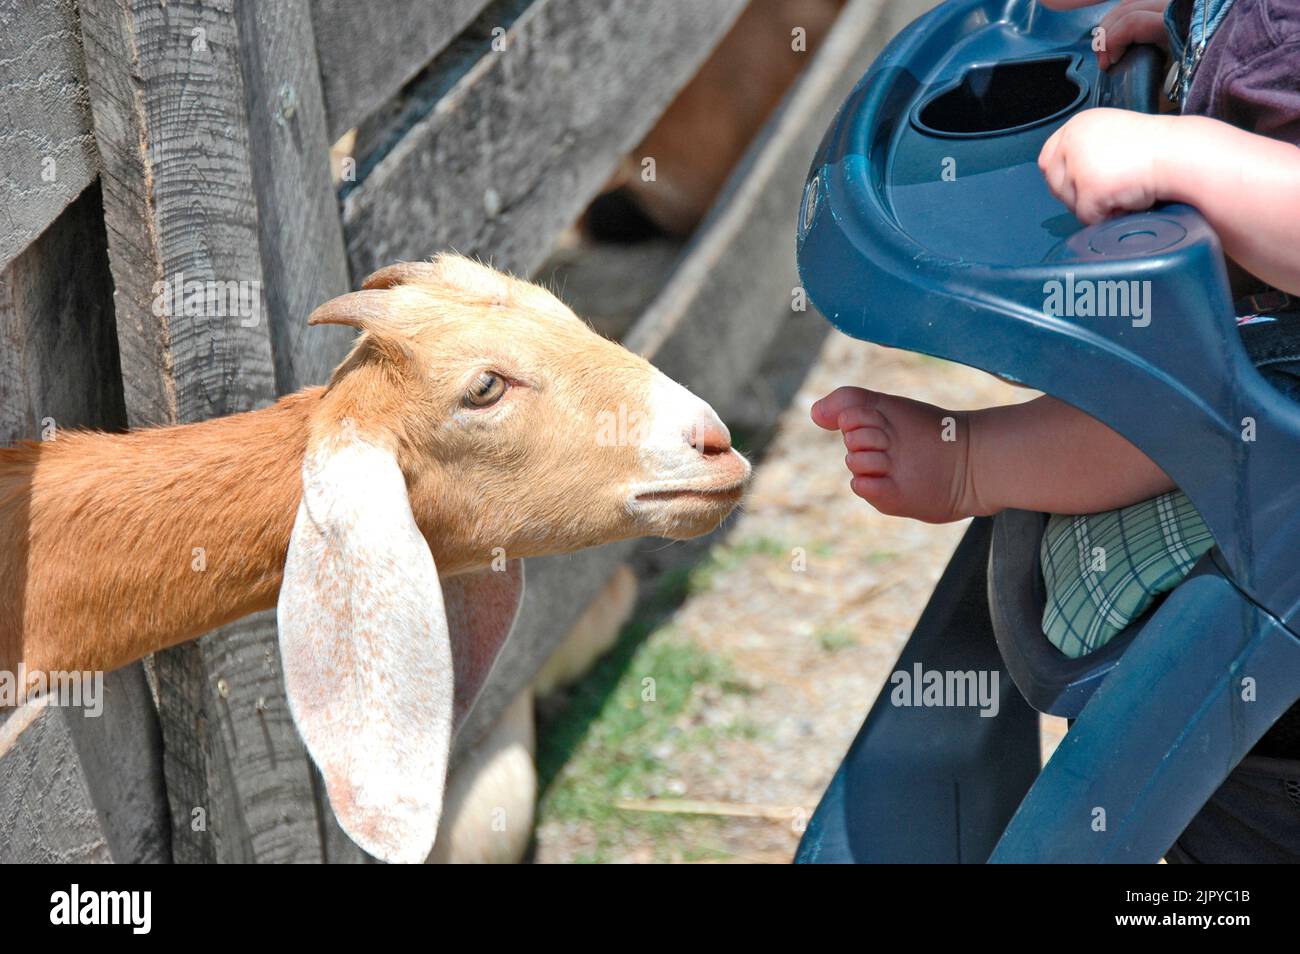 Goats on a farm with long ears Stock Photo